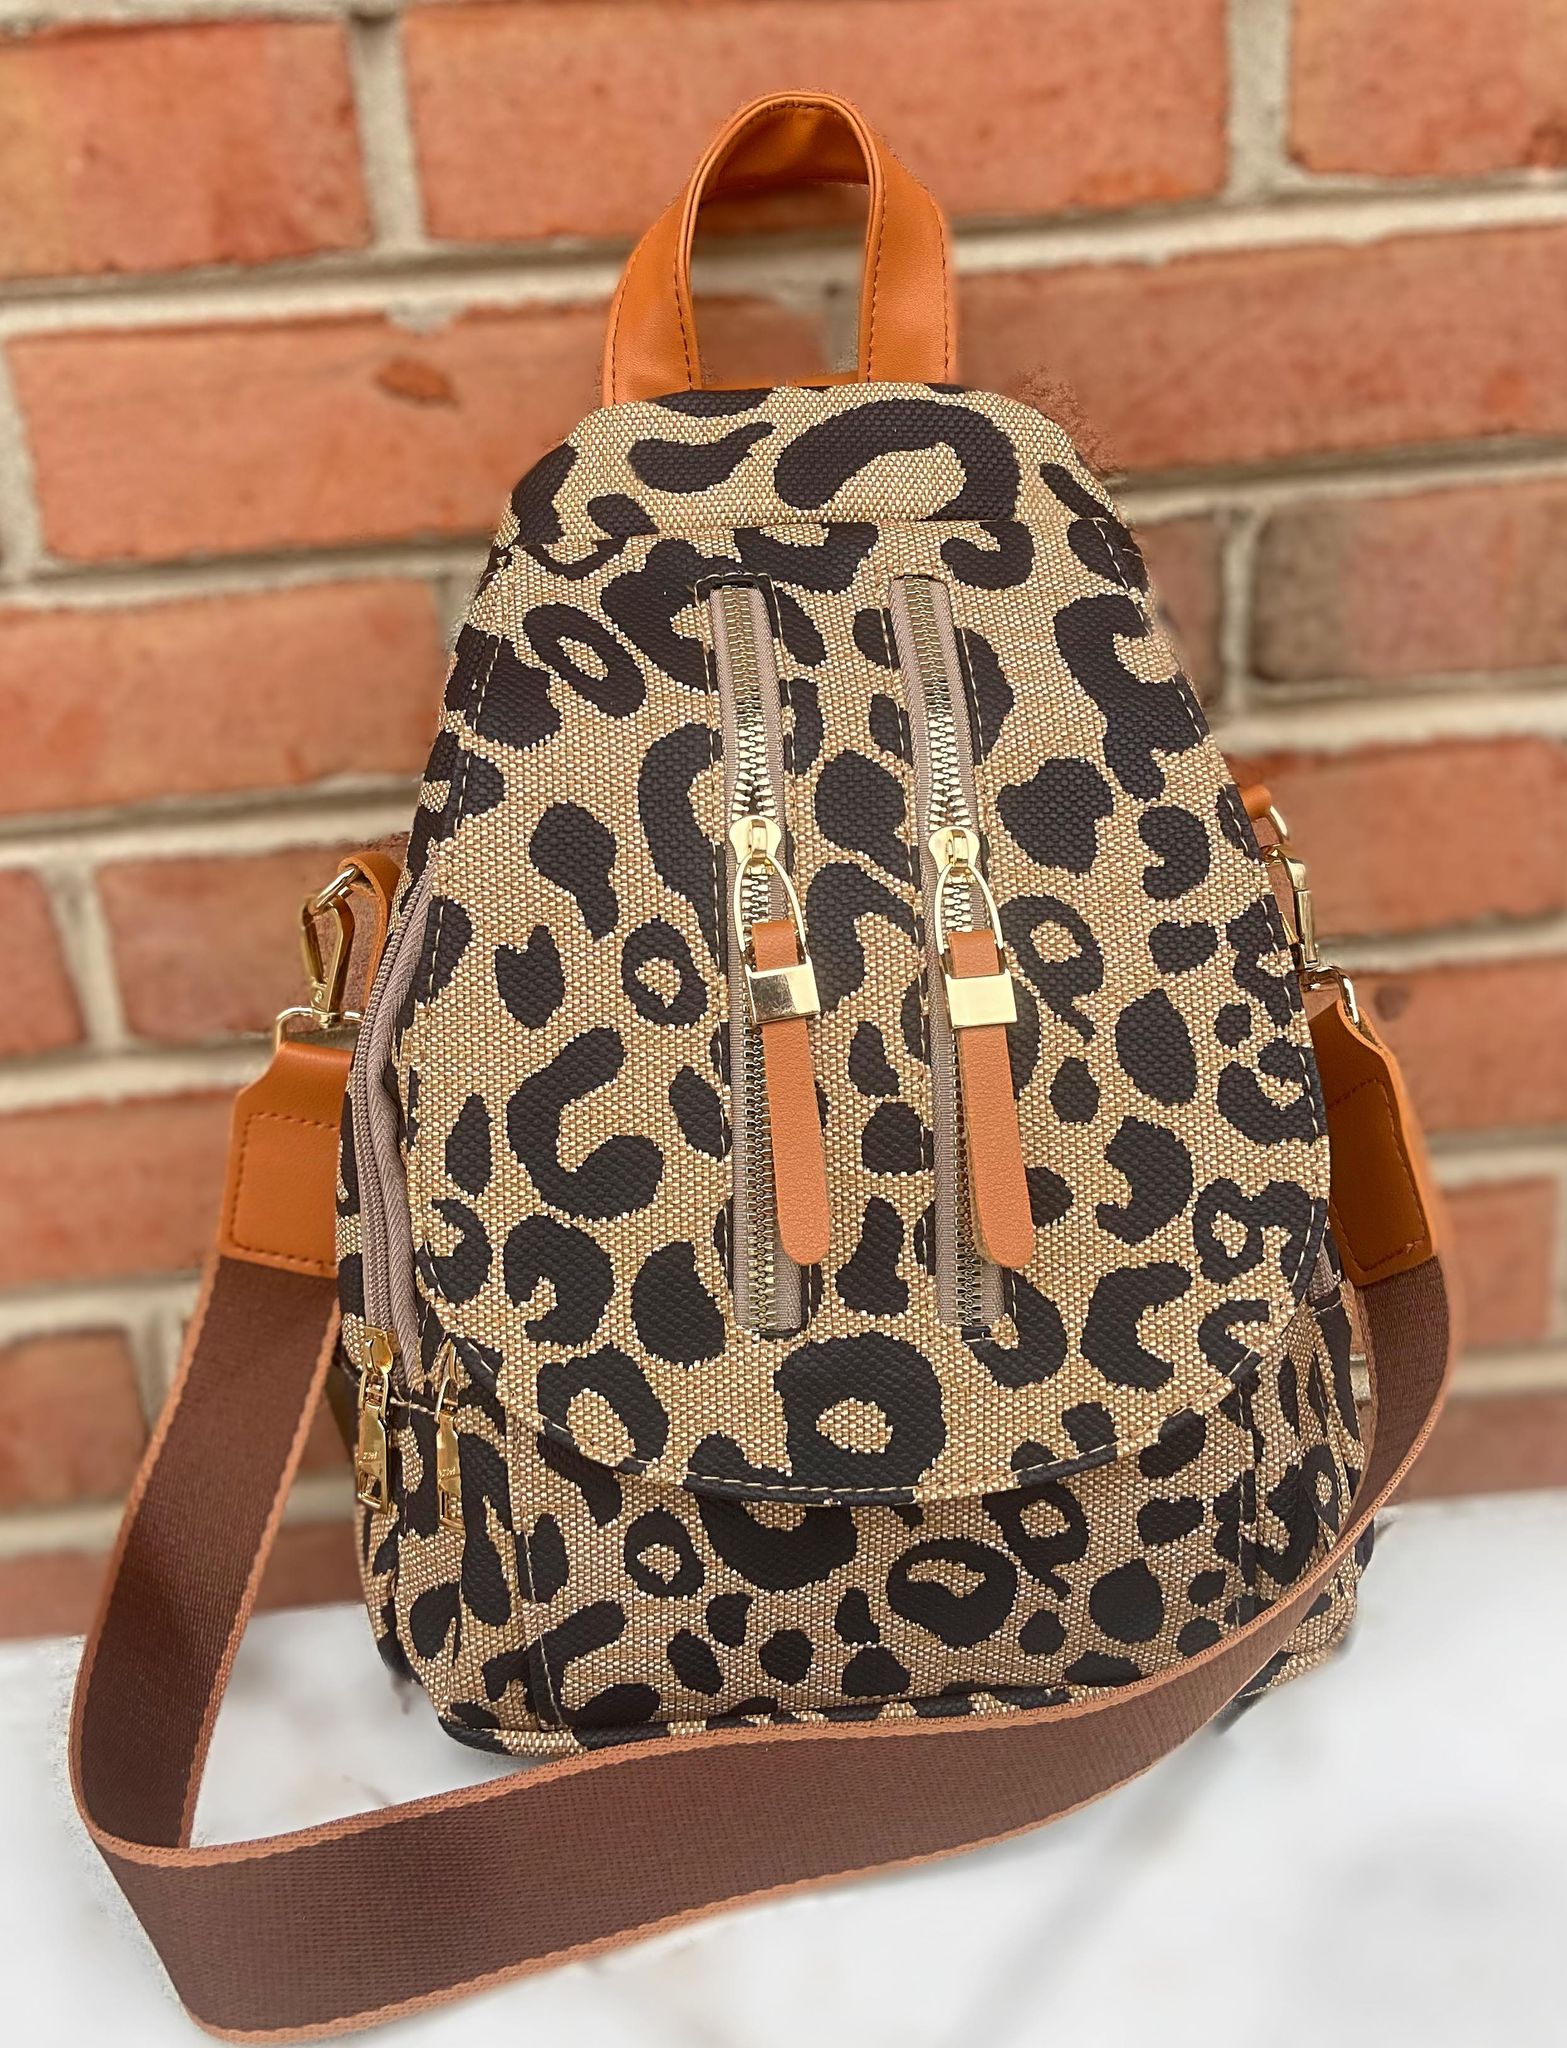 Leopard Print Backpack Purse